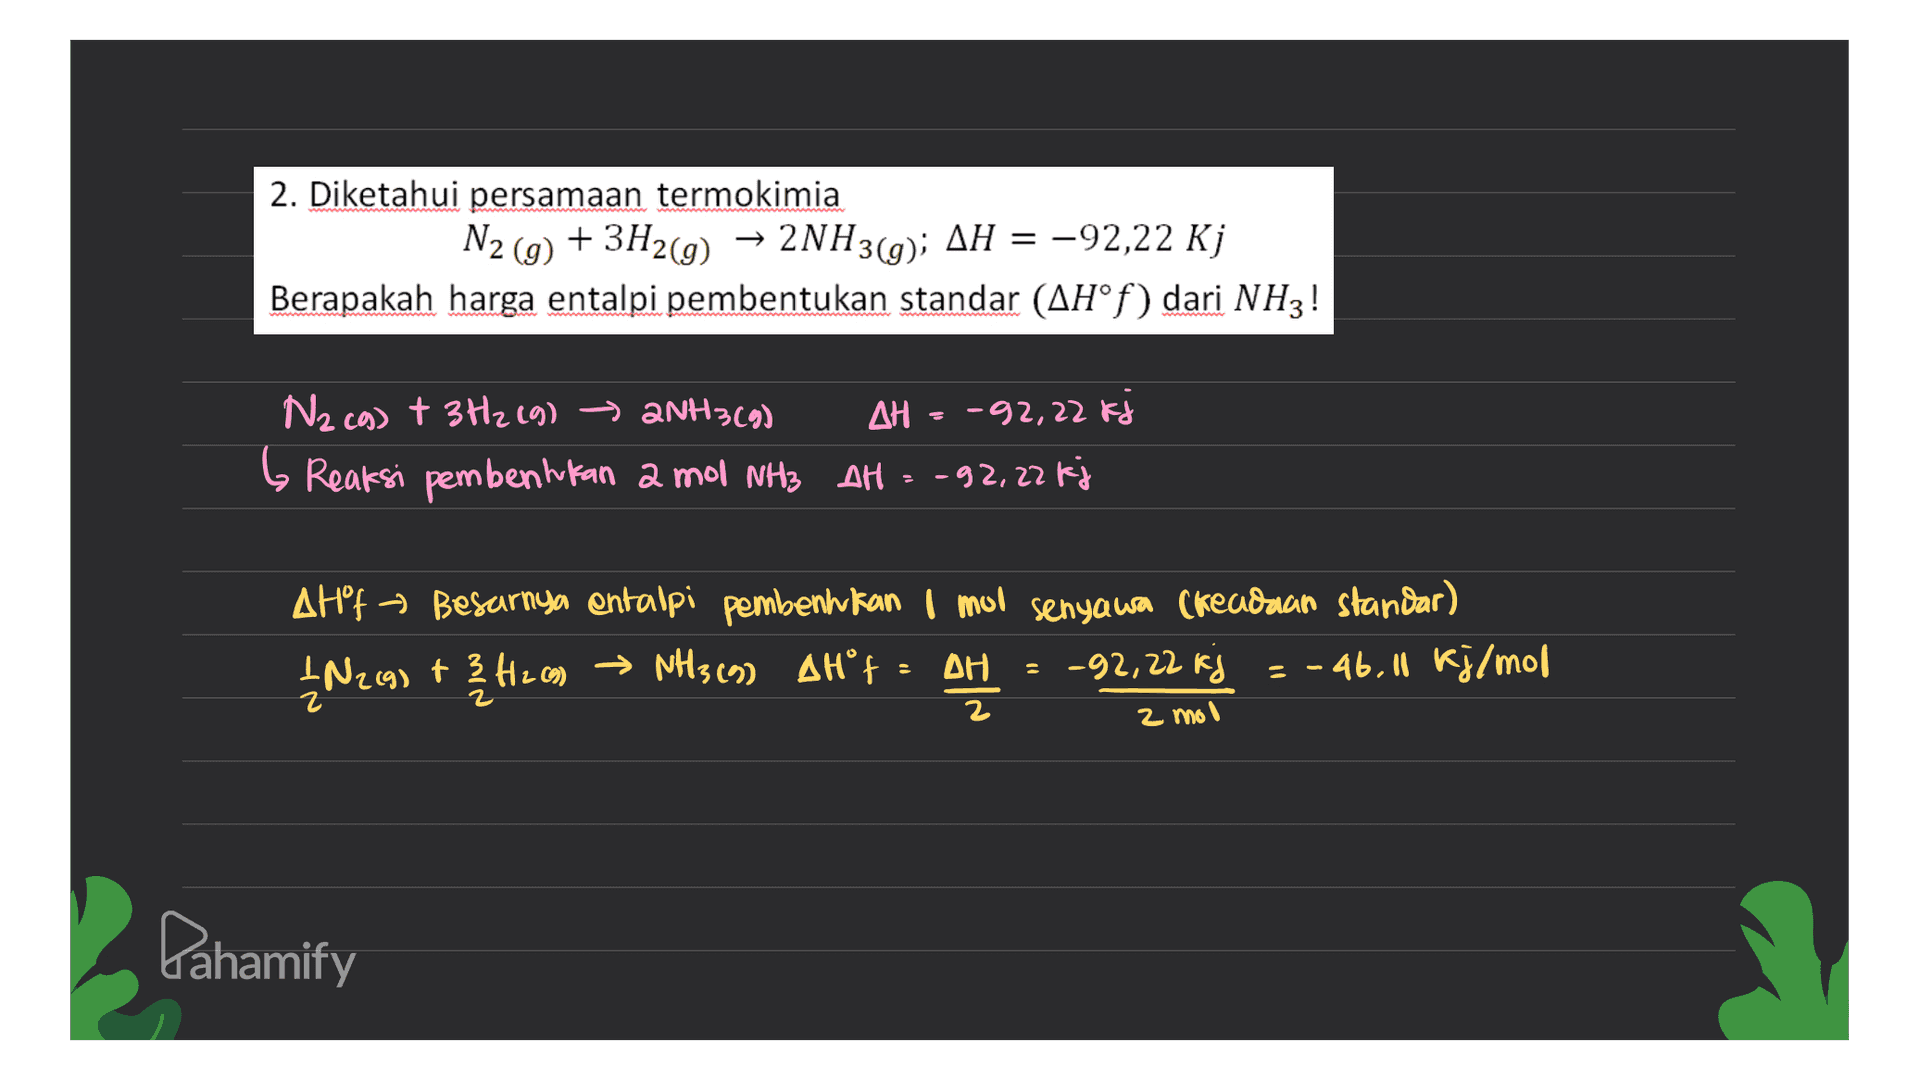 2. Diketahui persamaan termokimia N2(g) + 3H2(g) → 2NH3(g); AH = -92,22 Kj Berapakah harga entalpi pembentukan standar (AH°f) dari NHz! Nzco) + 3H2(g) → 2NH3(g) AH = -32,22 Fa b Reaksi pembentukan 2 mol NH3 AH = -92,22 kj AHF Besarnya entalpi pembentukan I mul senyawa (keadaan standar) IN269) + 3412 c) → NH3 (9) AHF = AH = -92,22 kg = -46,11 kj/mol 2 mol Lahamify 